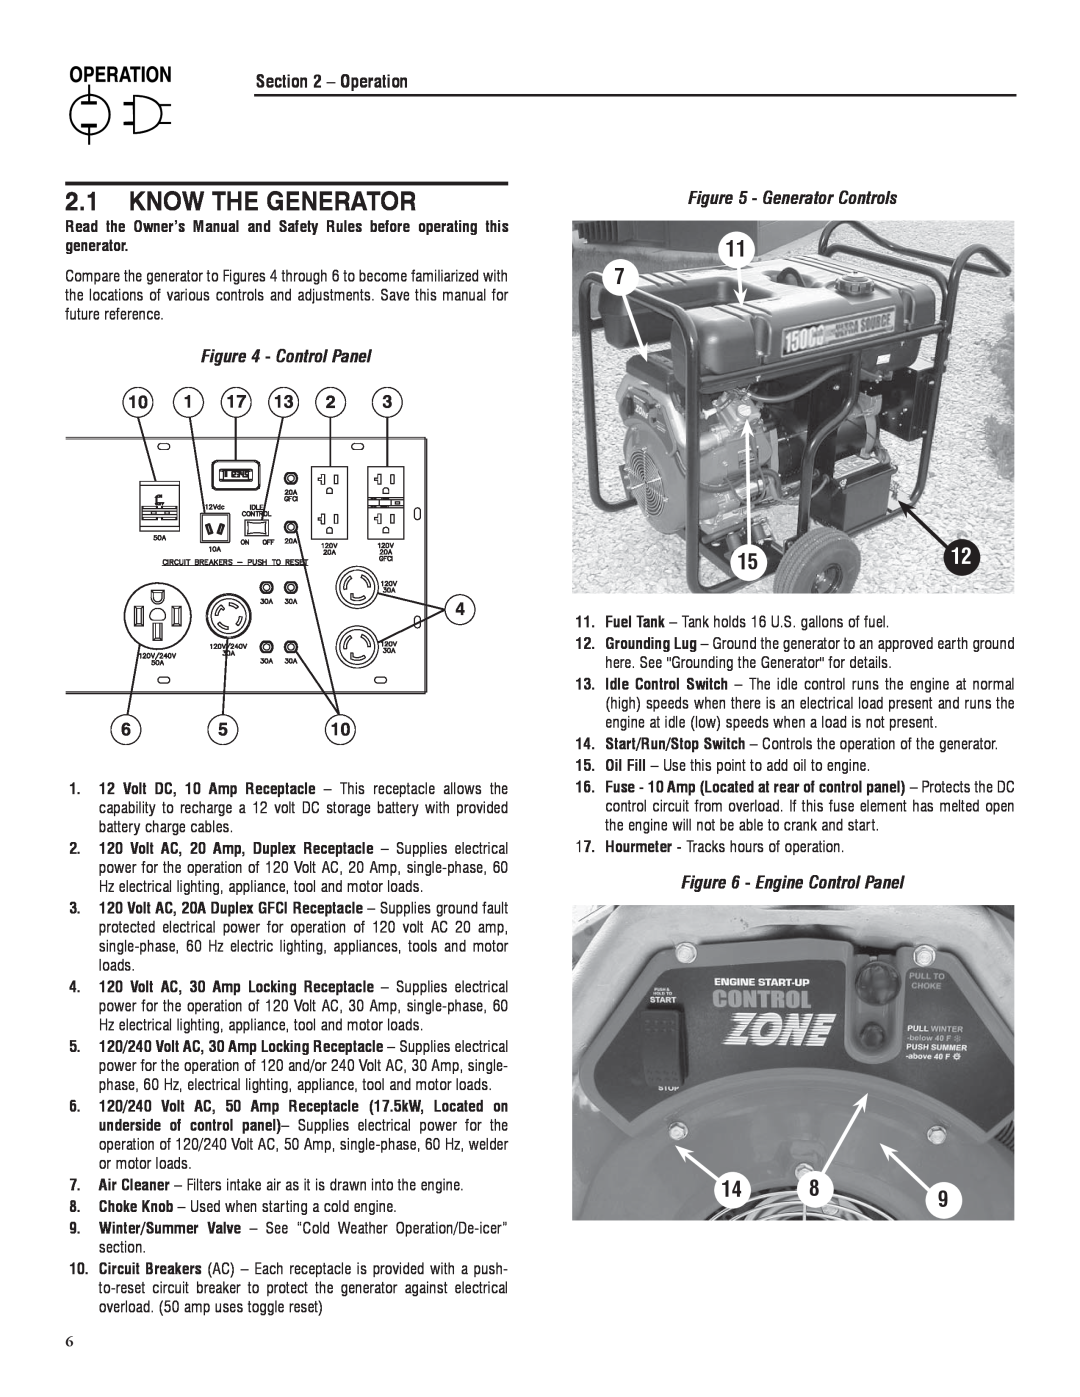 Sears 005735-0, 005734-0 manual Know The Generator, 1512, Generator Controls, Engine Control Panel 